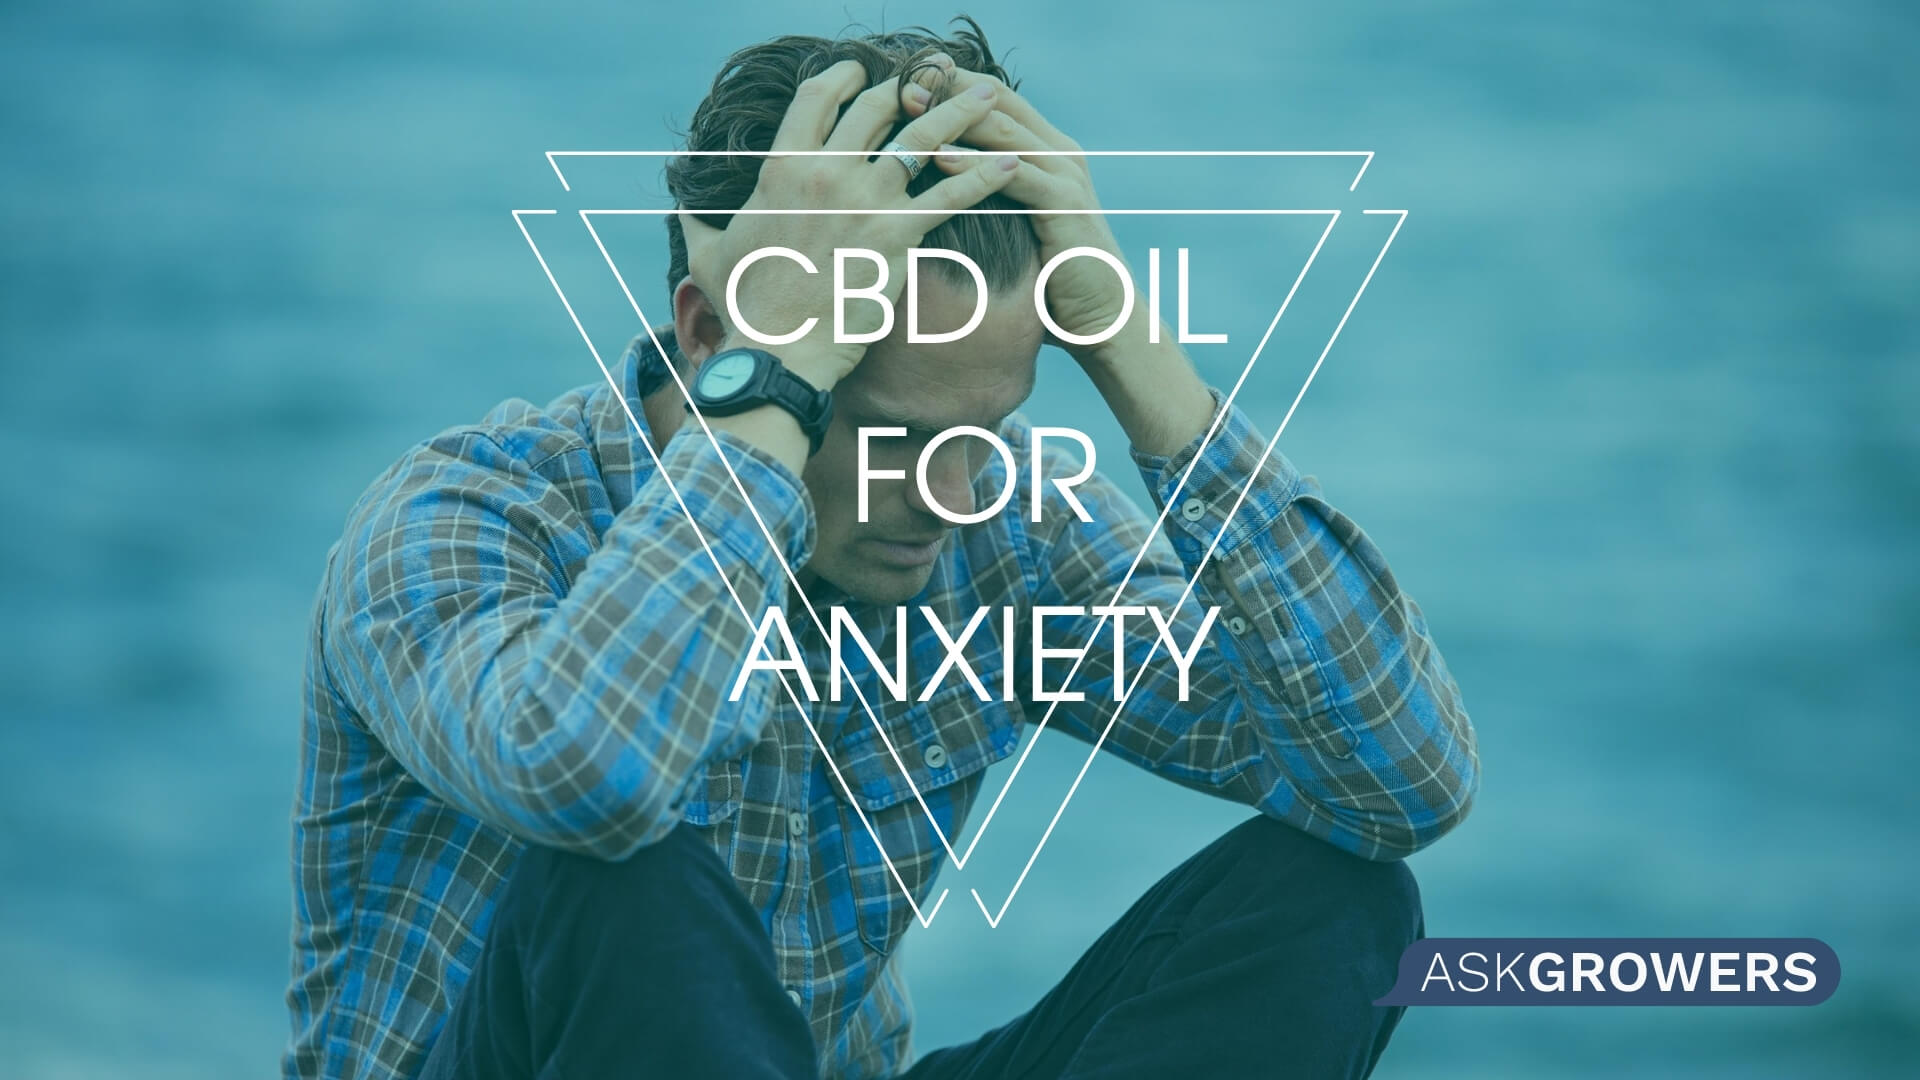 Does CBD Help Anxiety?